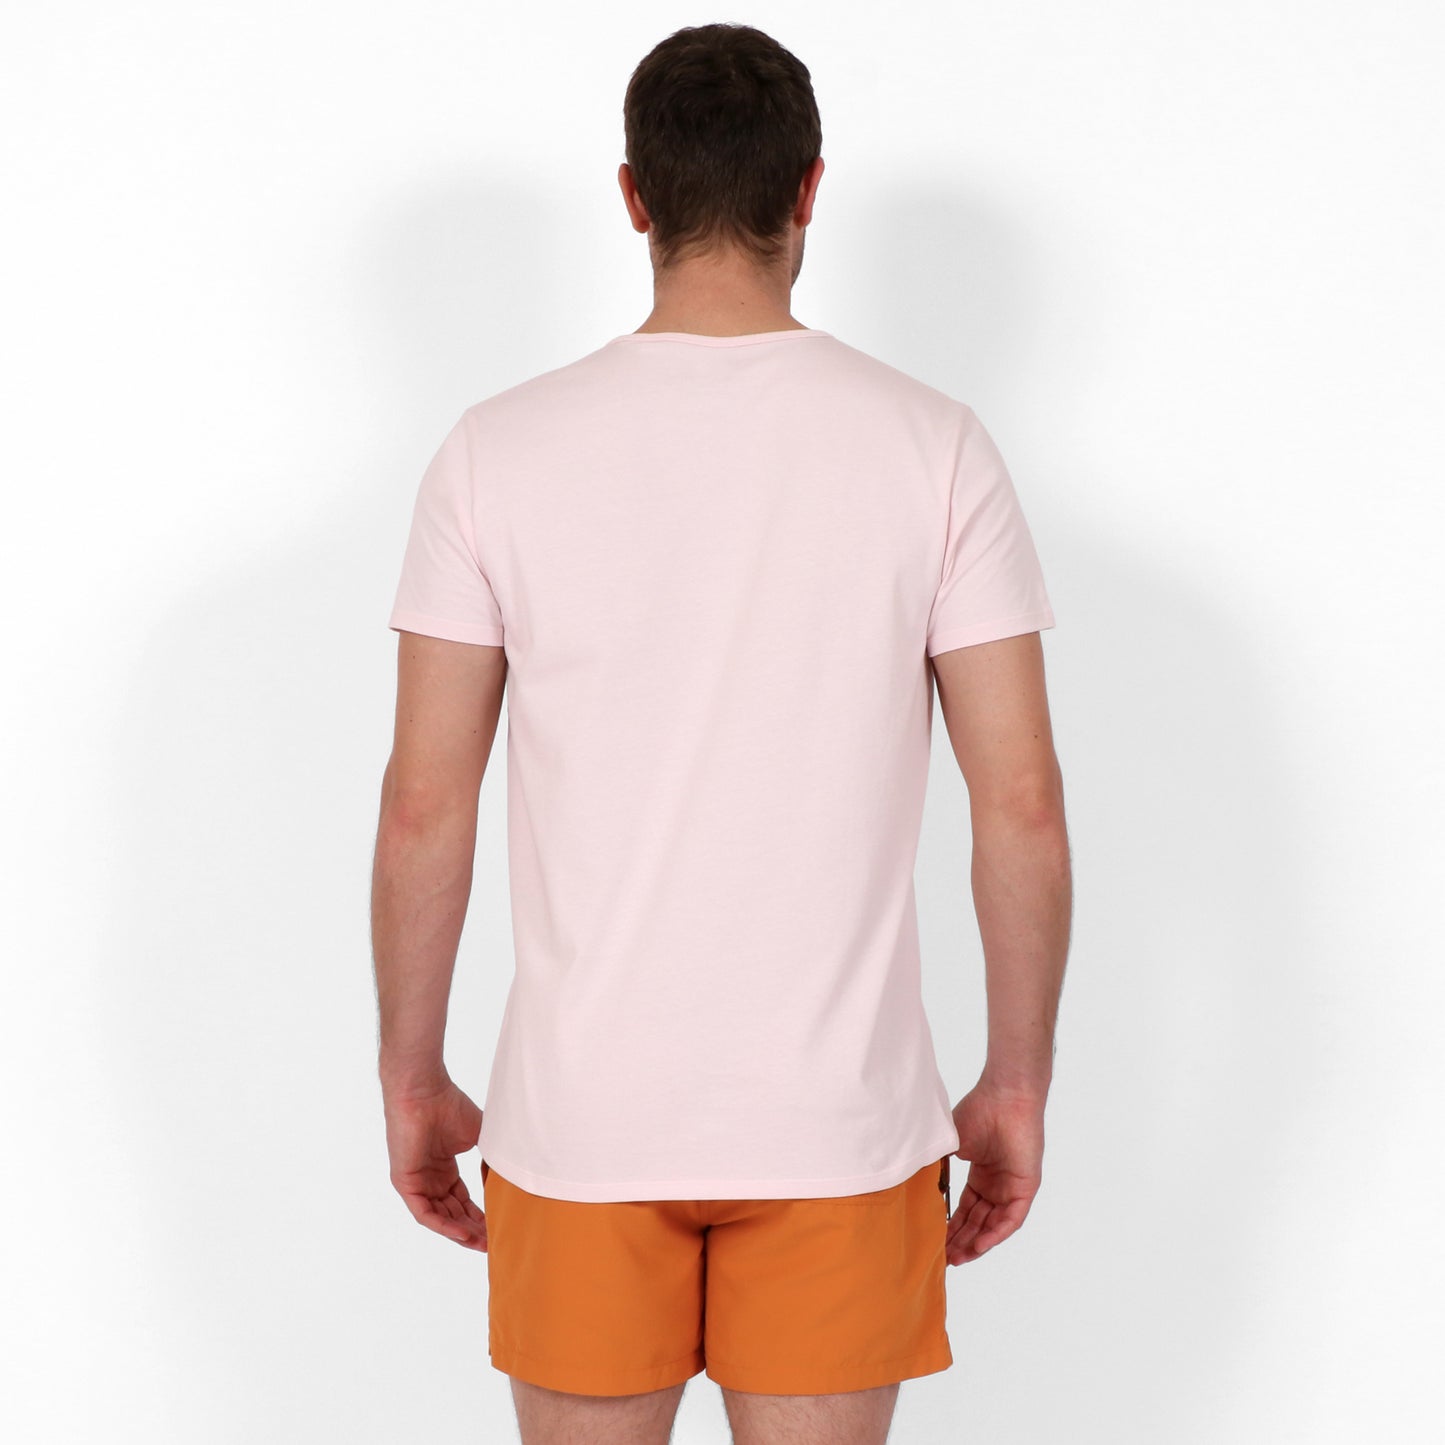 Original Weekend Organic Cotton Men's Pocket T-Shirt in Dawn Pink on Body Back View